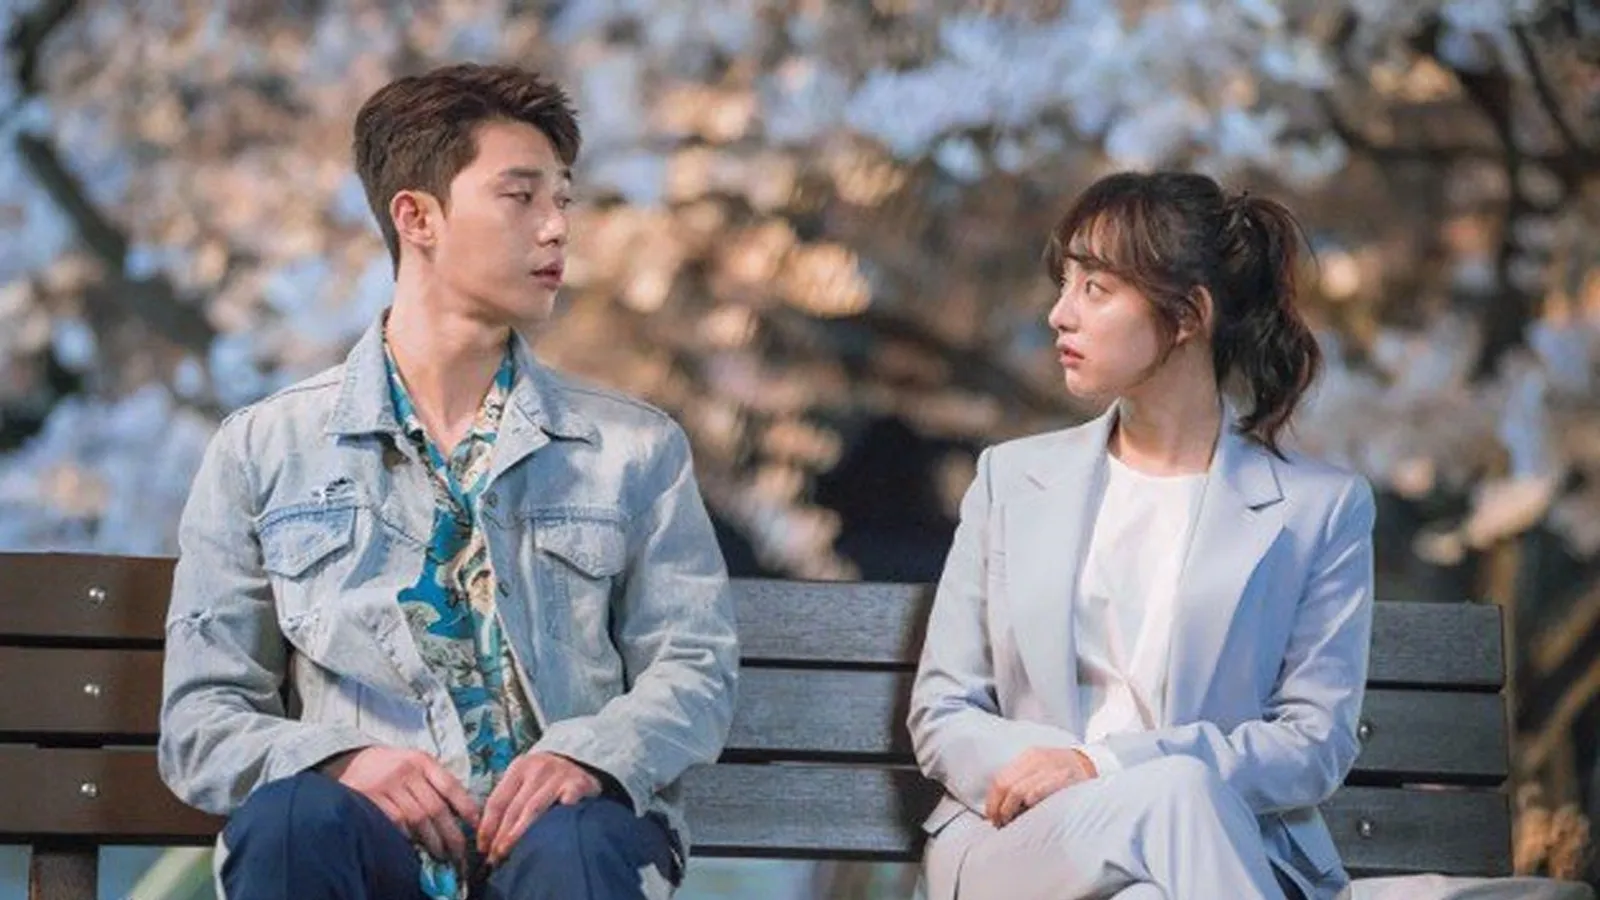 Romantis Banget, Coba 5 Ide Kencan Seru a la Drama Korea Ini Yuk!